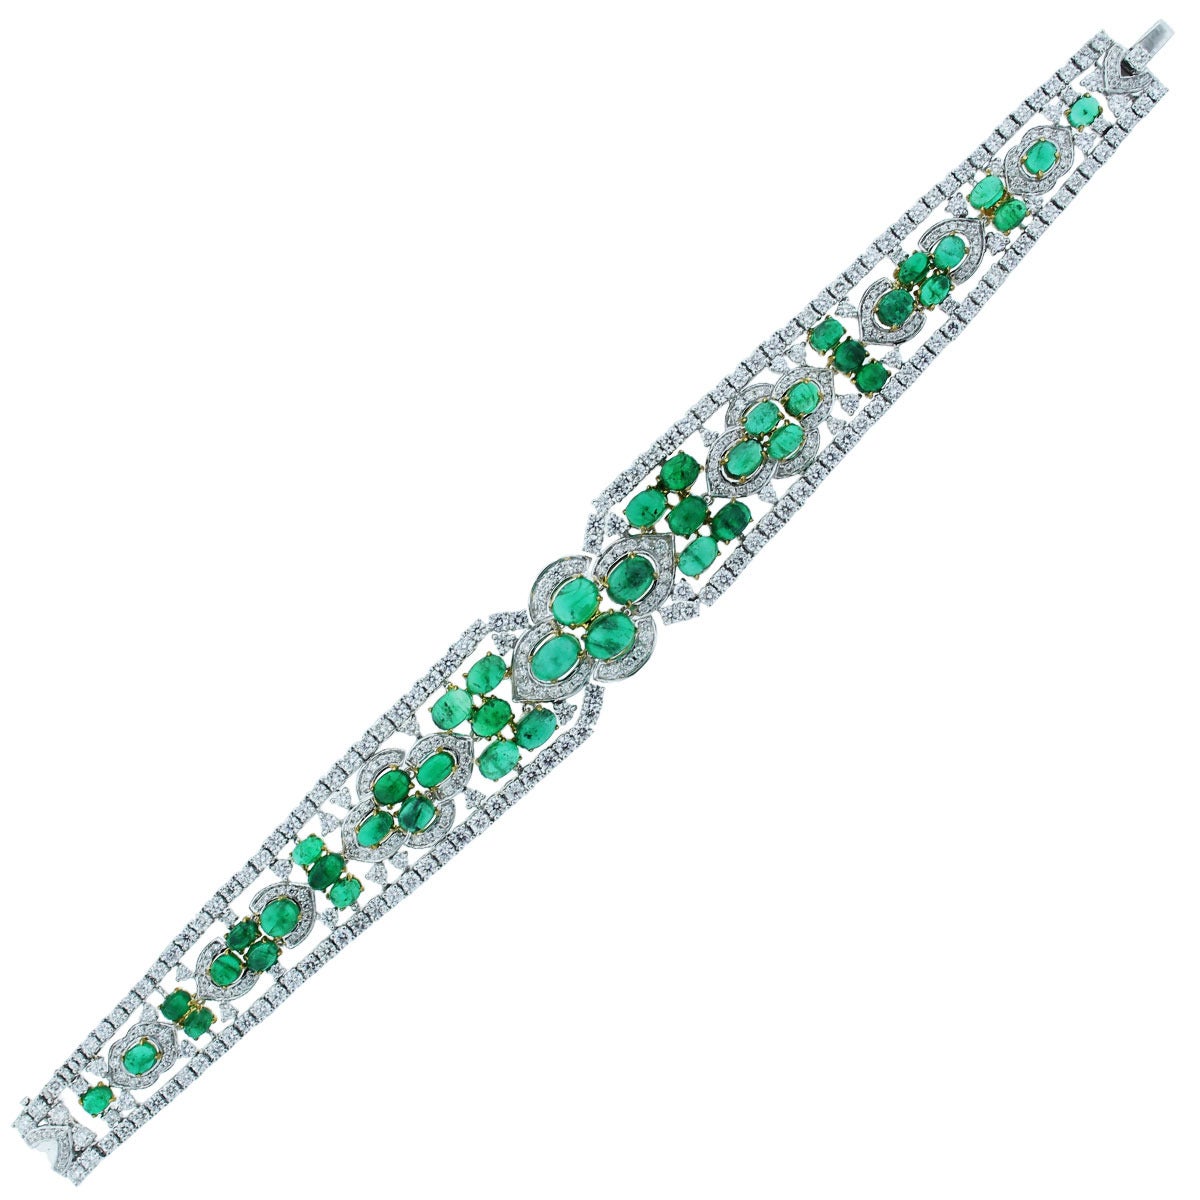 Style: Style: Platinum 6.5ctw Diamond Emerald Ladies Bracelet
Diamond Details: Approximately10.03ctw (357 diamonds total) of Round Brilliant Diamonds. Diamonds are G in color and VS2-SI2 in clarity.
Gemstone Details: Approximately 22.22ctw (44